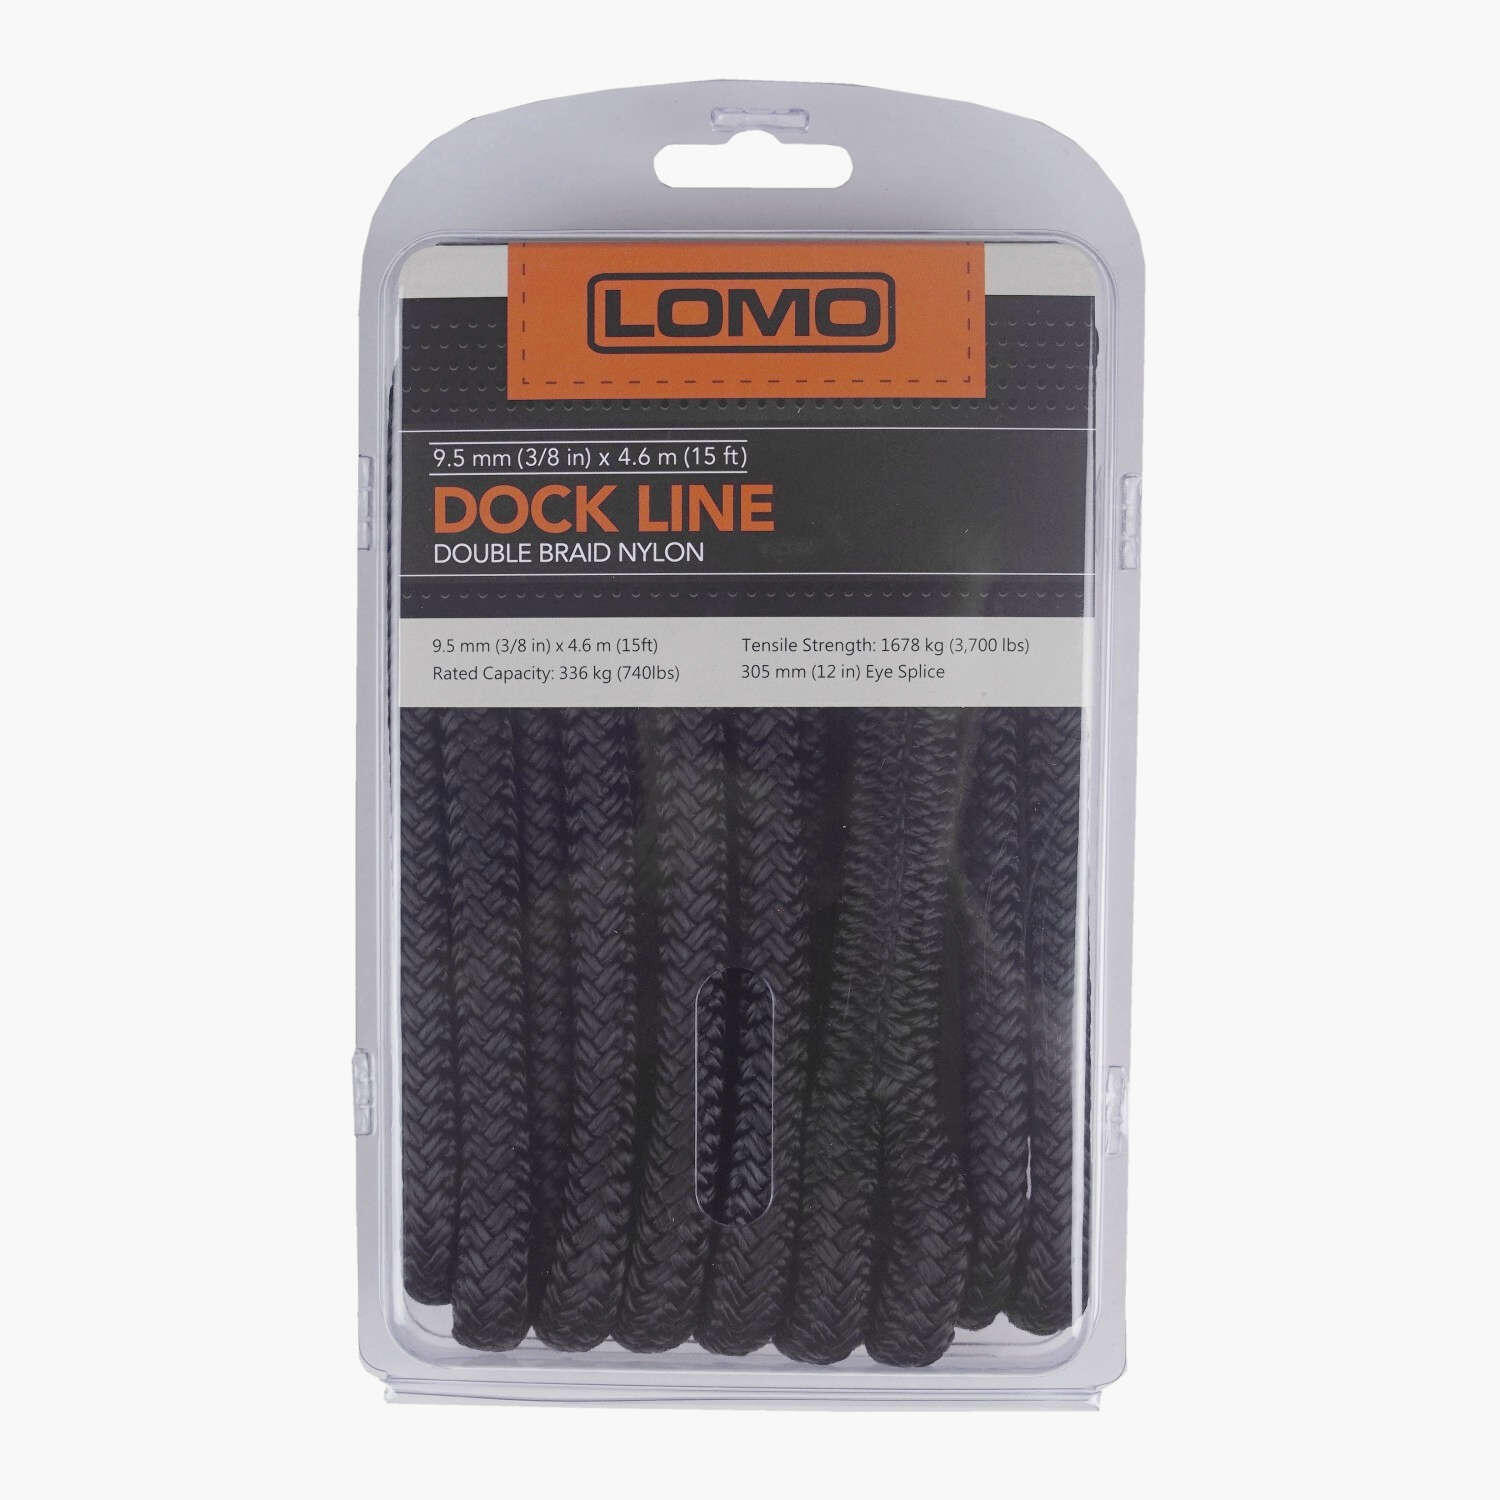 LOMO Lomo Dock Line / Mooring Line, 9.5mm x 4.6m Double Braided Nylon Rope - Black